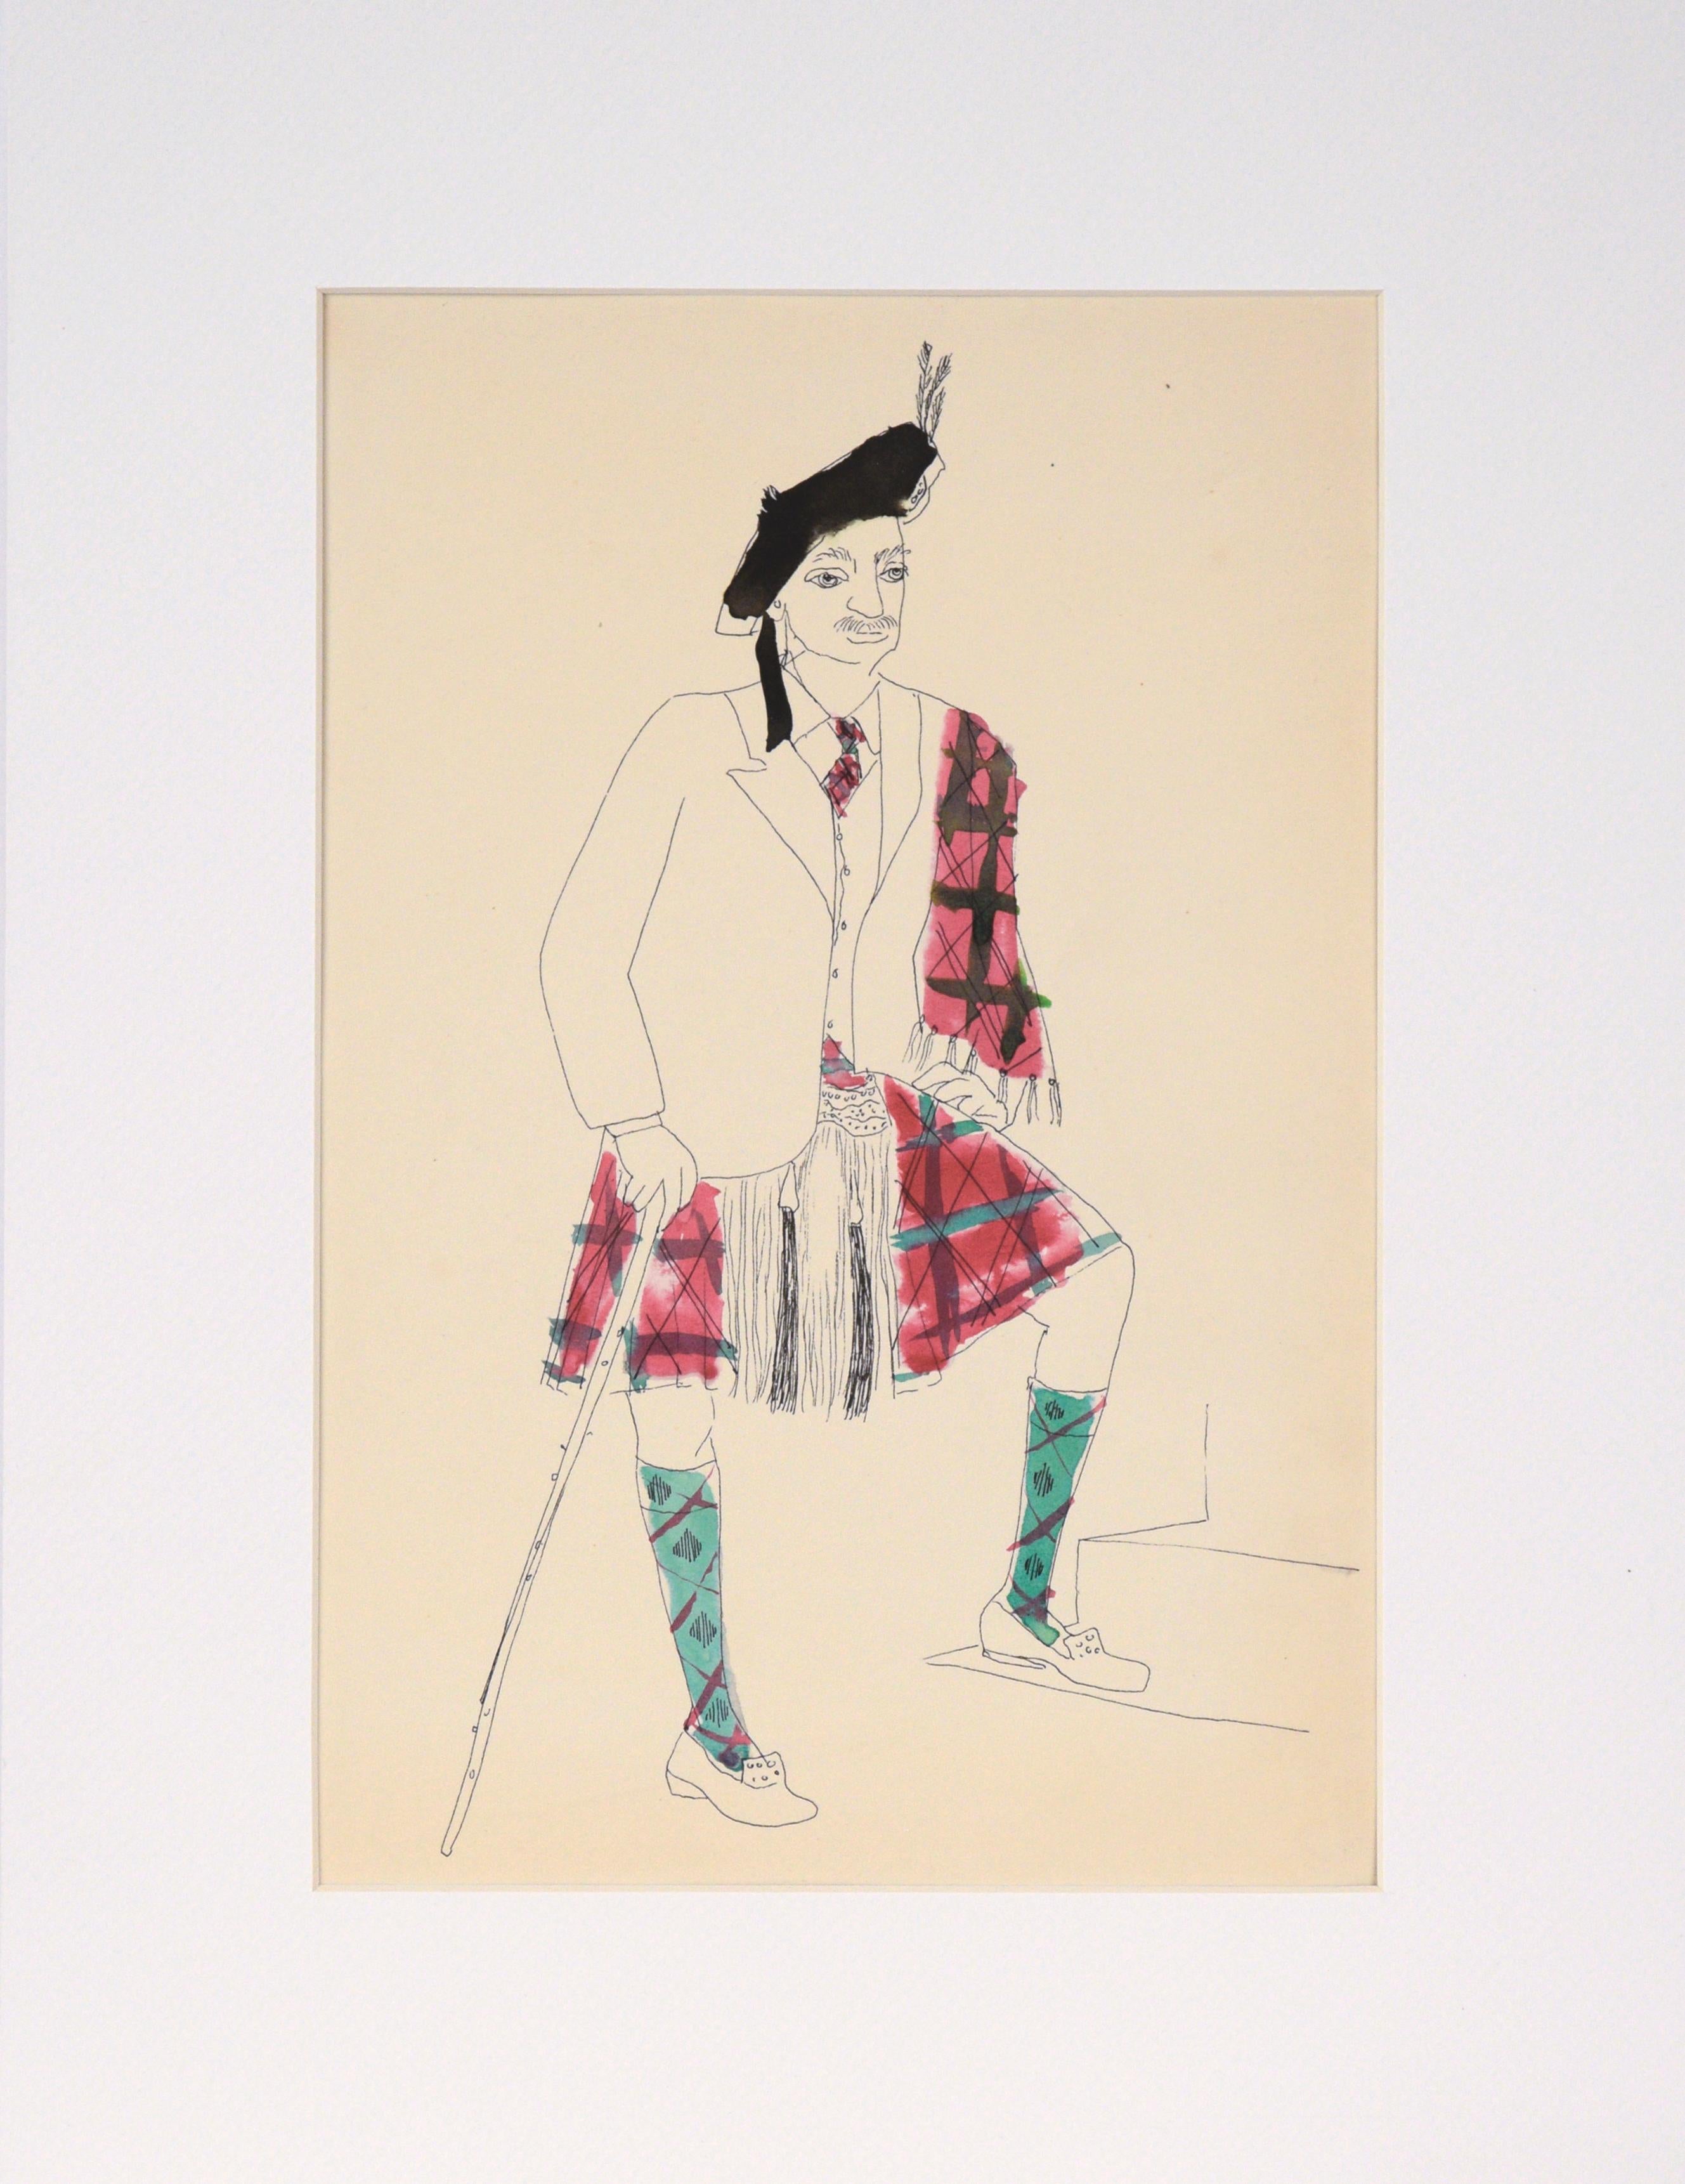 Irene Pattinson Portrait - Man in a Scottish Kilt - Vintage Illustration in Ink and Watercolor